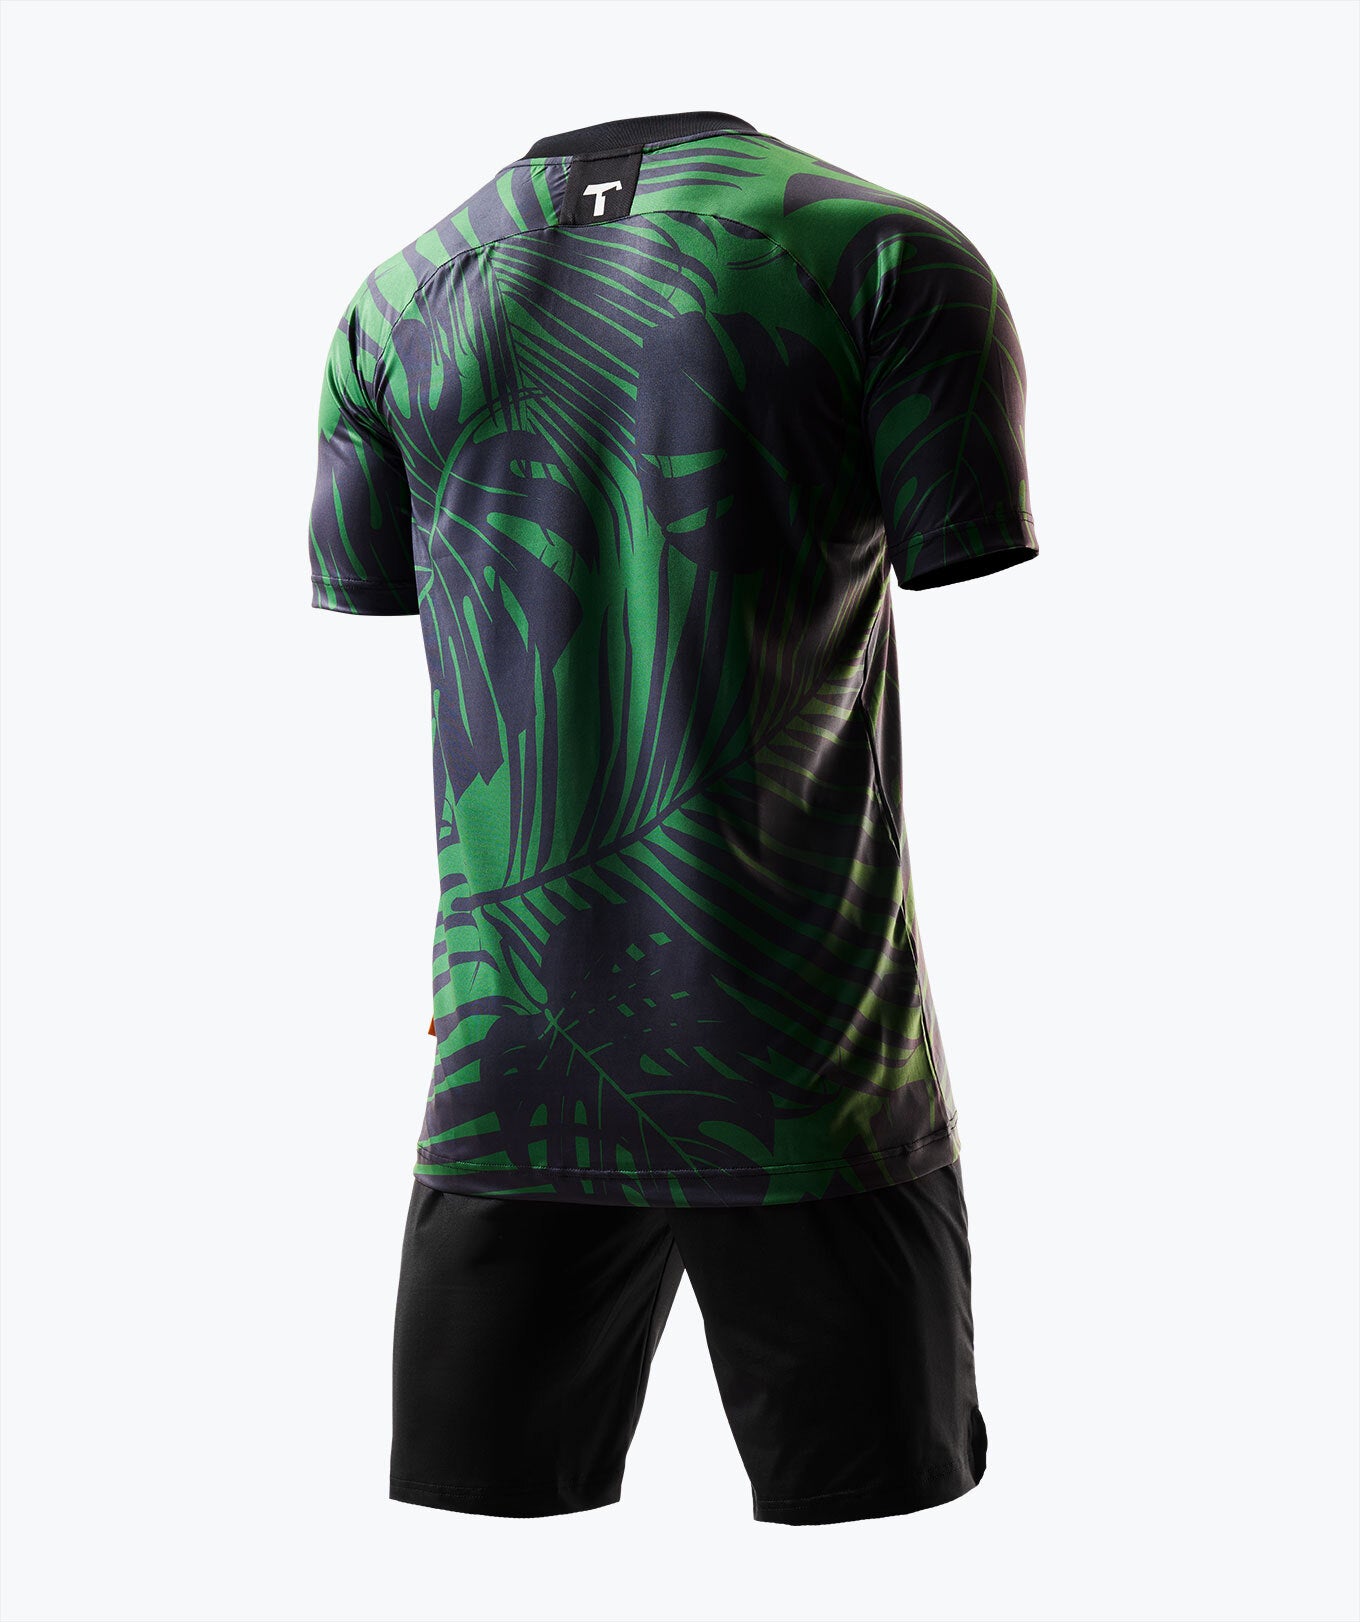 Customize goalkeeper jerseys - Print goalkeeper soccer jerseys